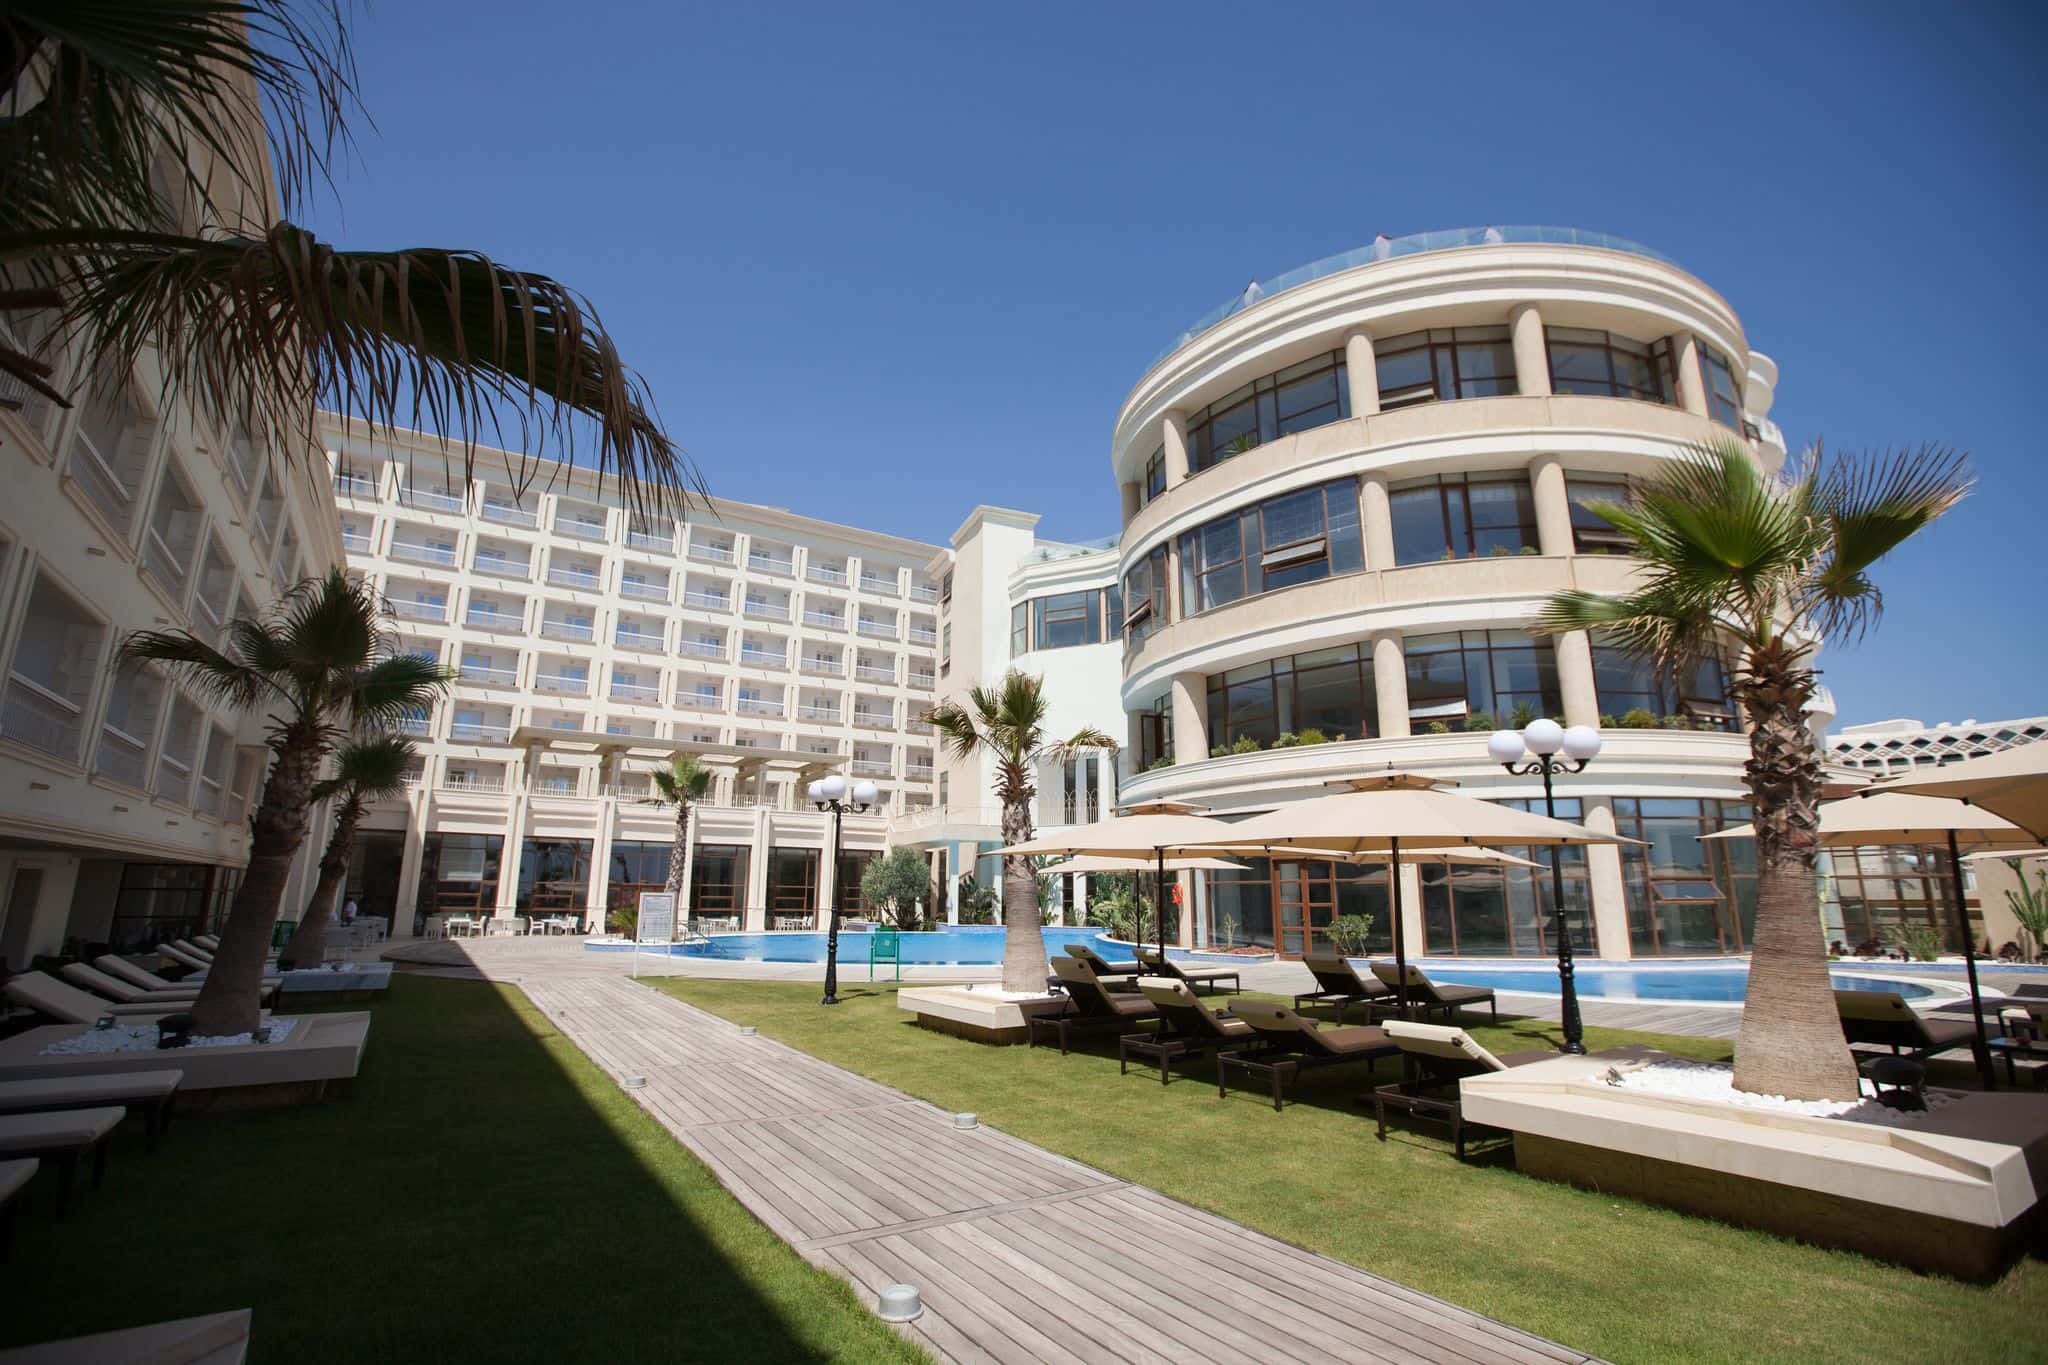 Sousse Palace Hotel Spa